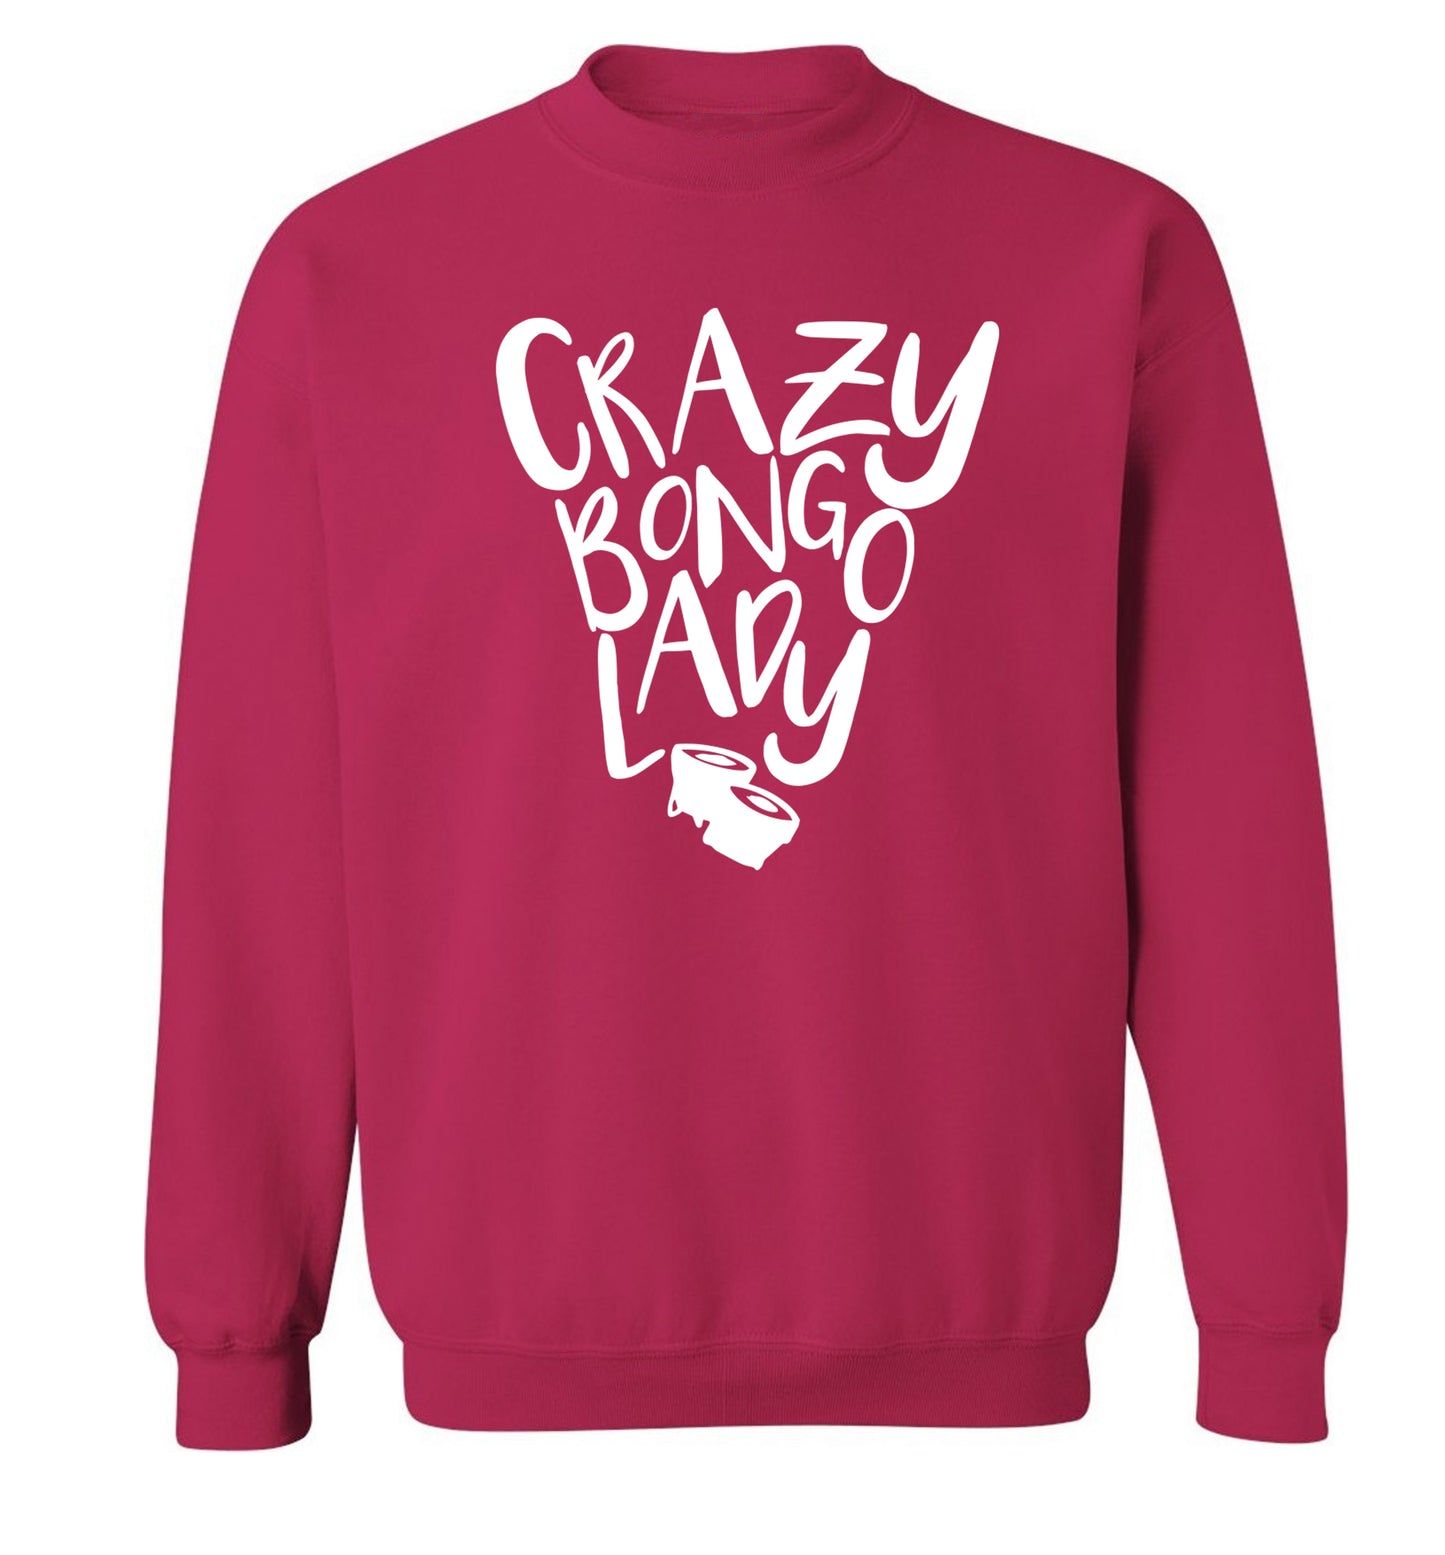 Crazy bongo lady Adult's unisex pink Sweater 2XL